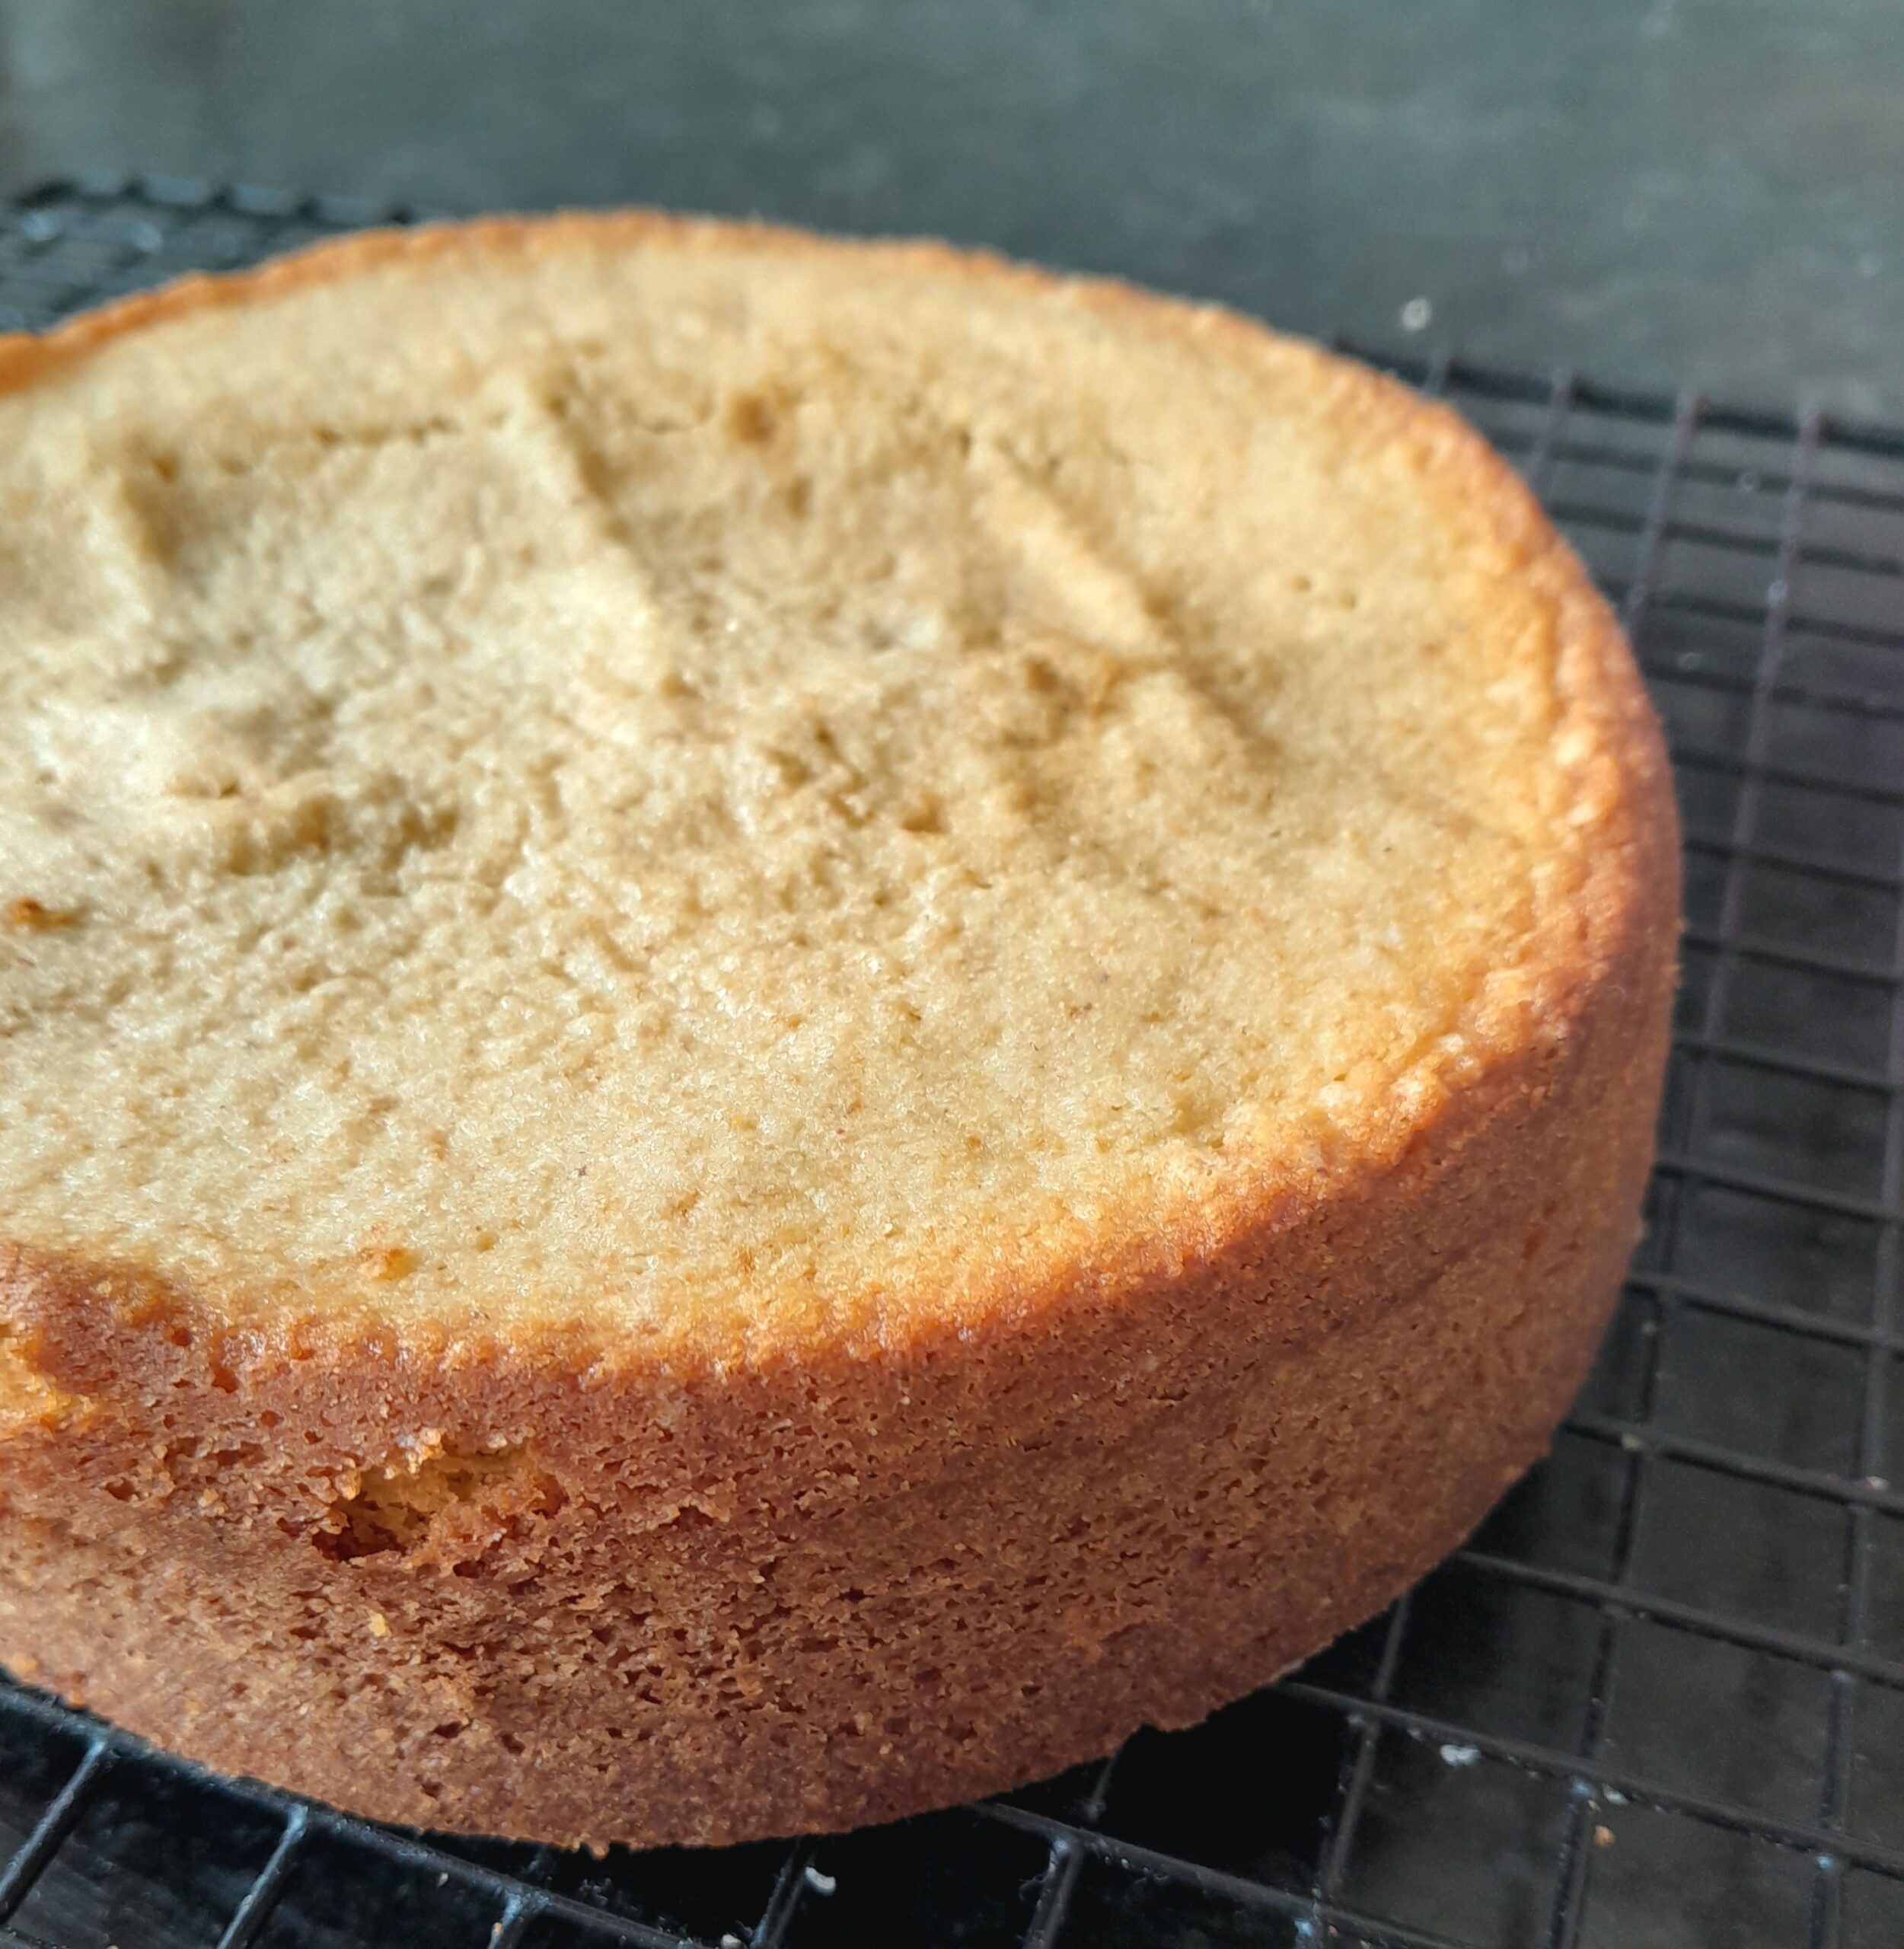 Easy Cinnamon Roll Cake | A Quick and Delicious Cake Recipe